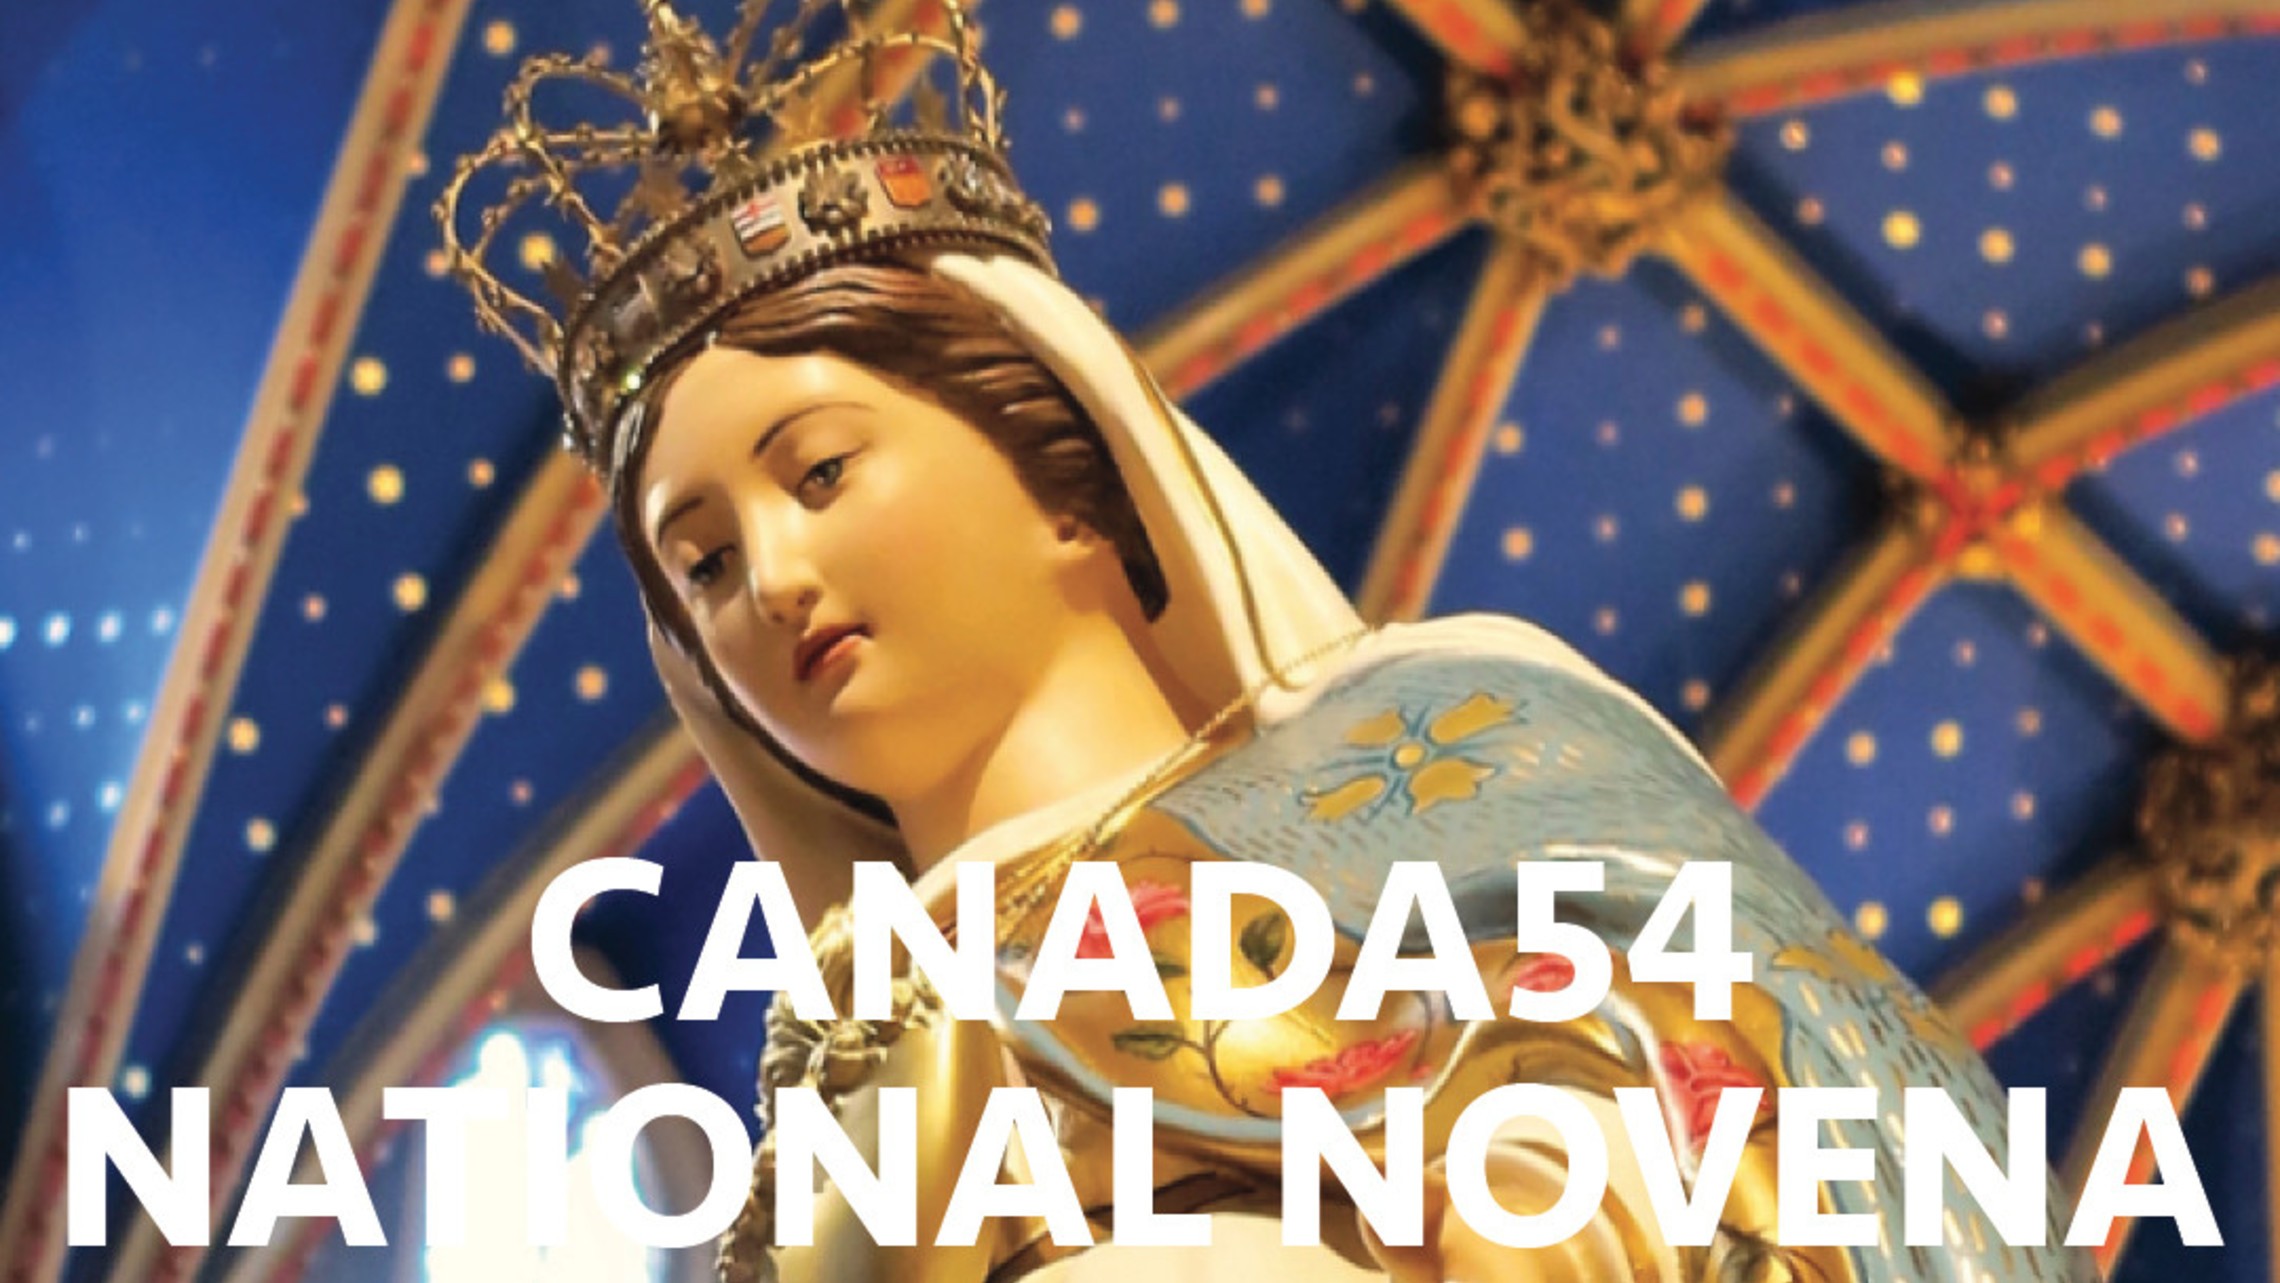 Canada54 National Novena